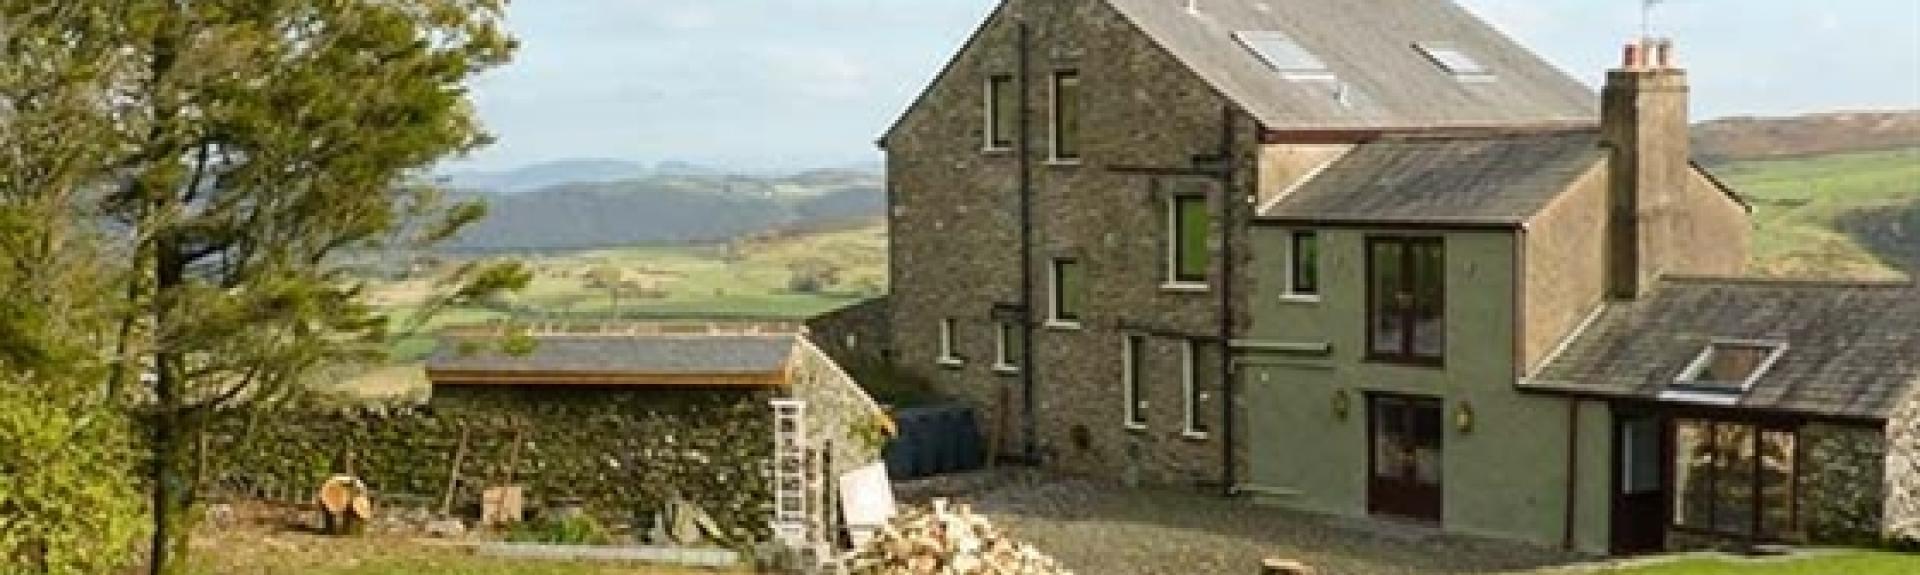 3-storey stone-built Cumbrian farmhouse in a remote rural location